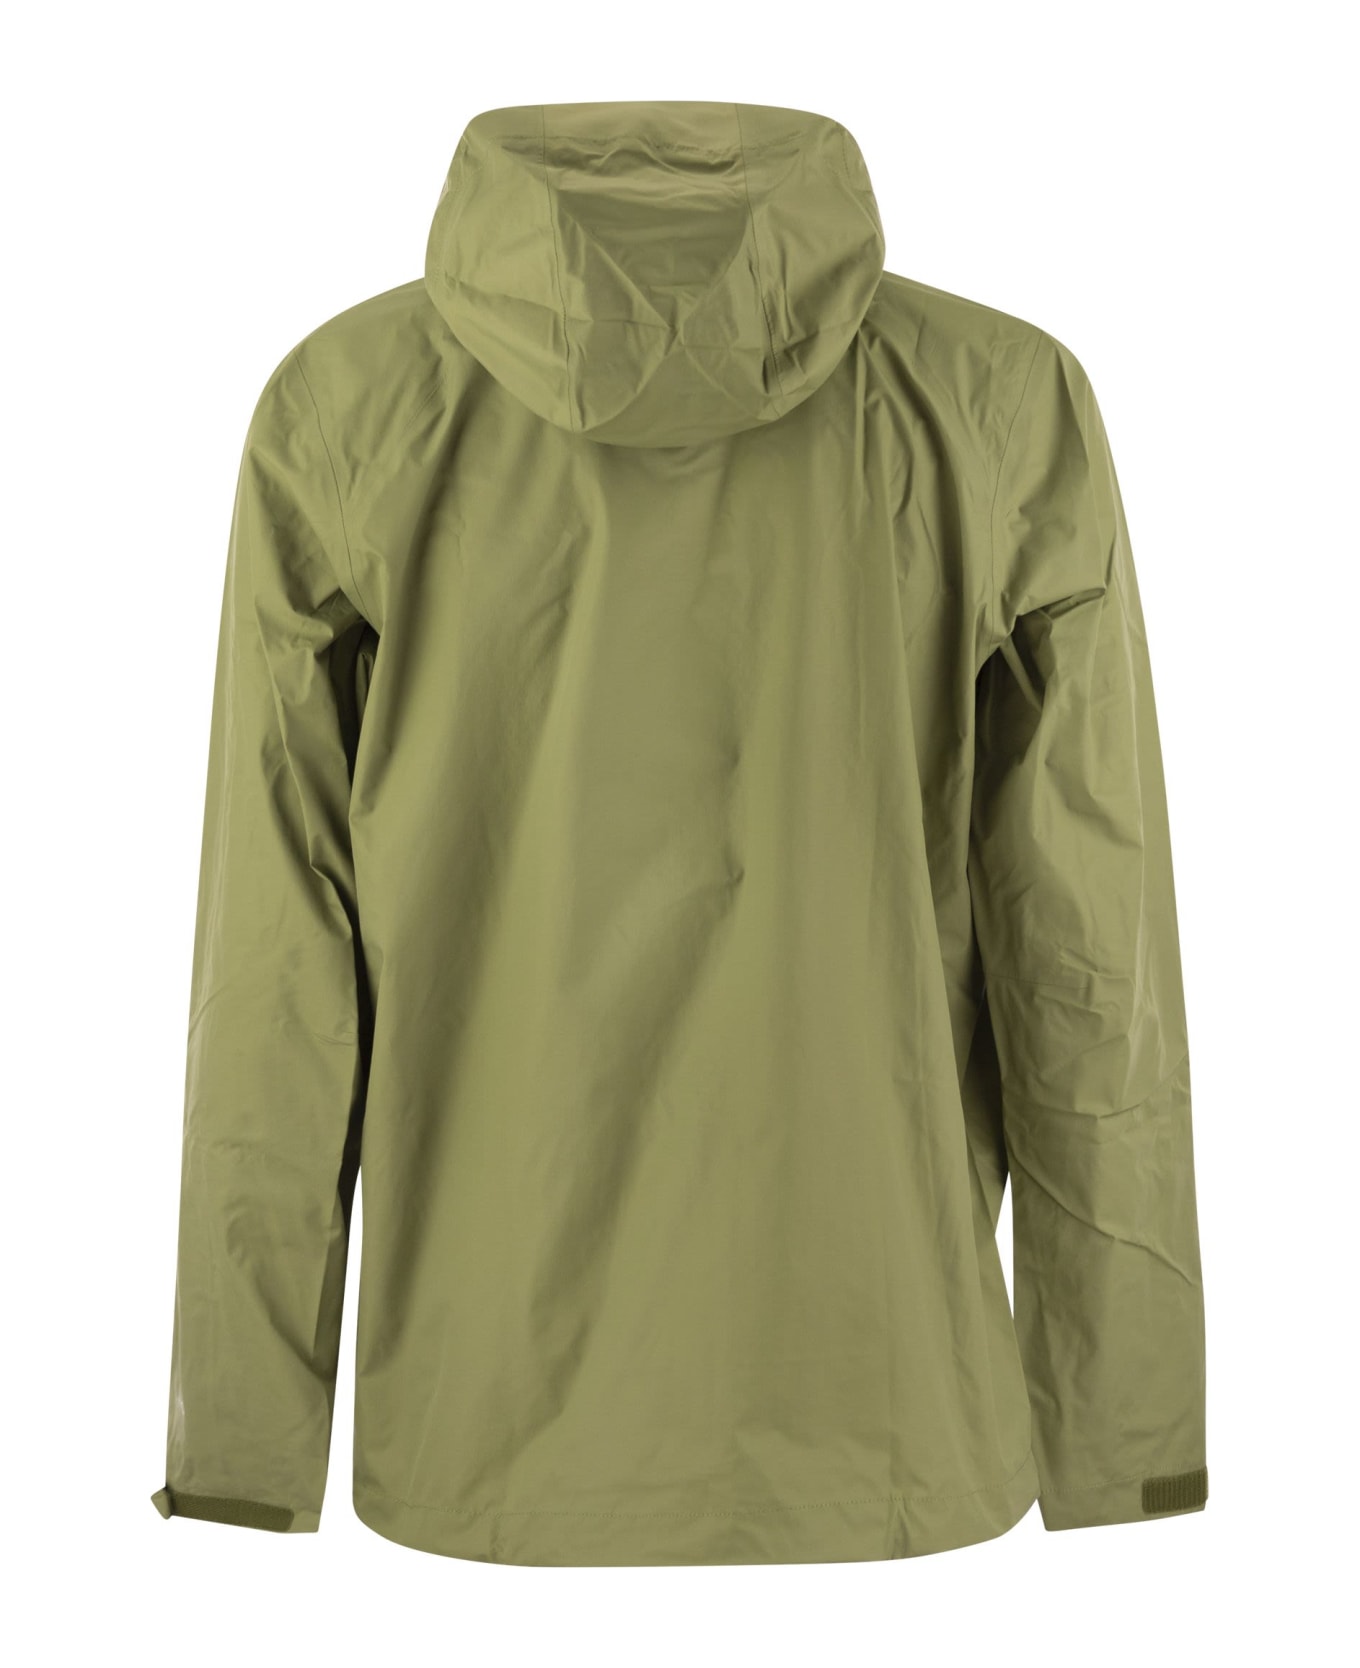 Patagonia Nylon Rainproof Jacket - Olive